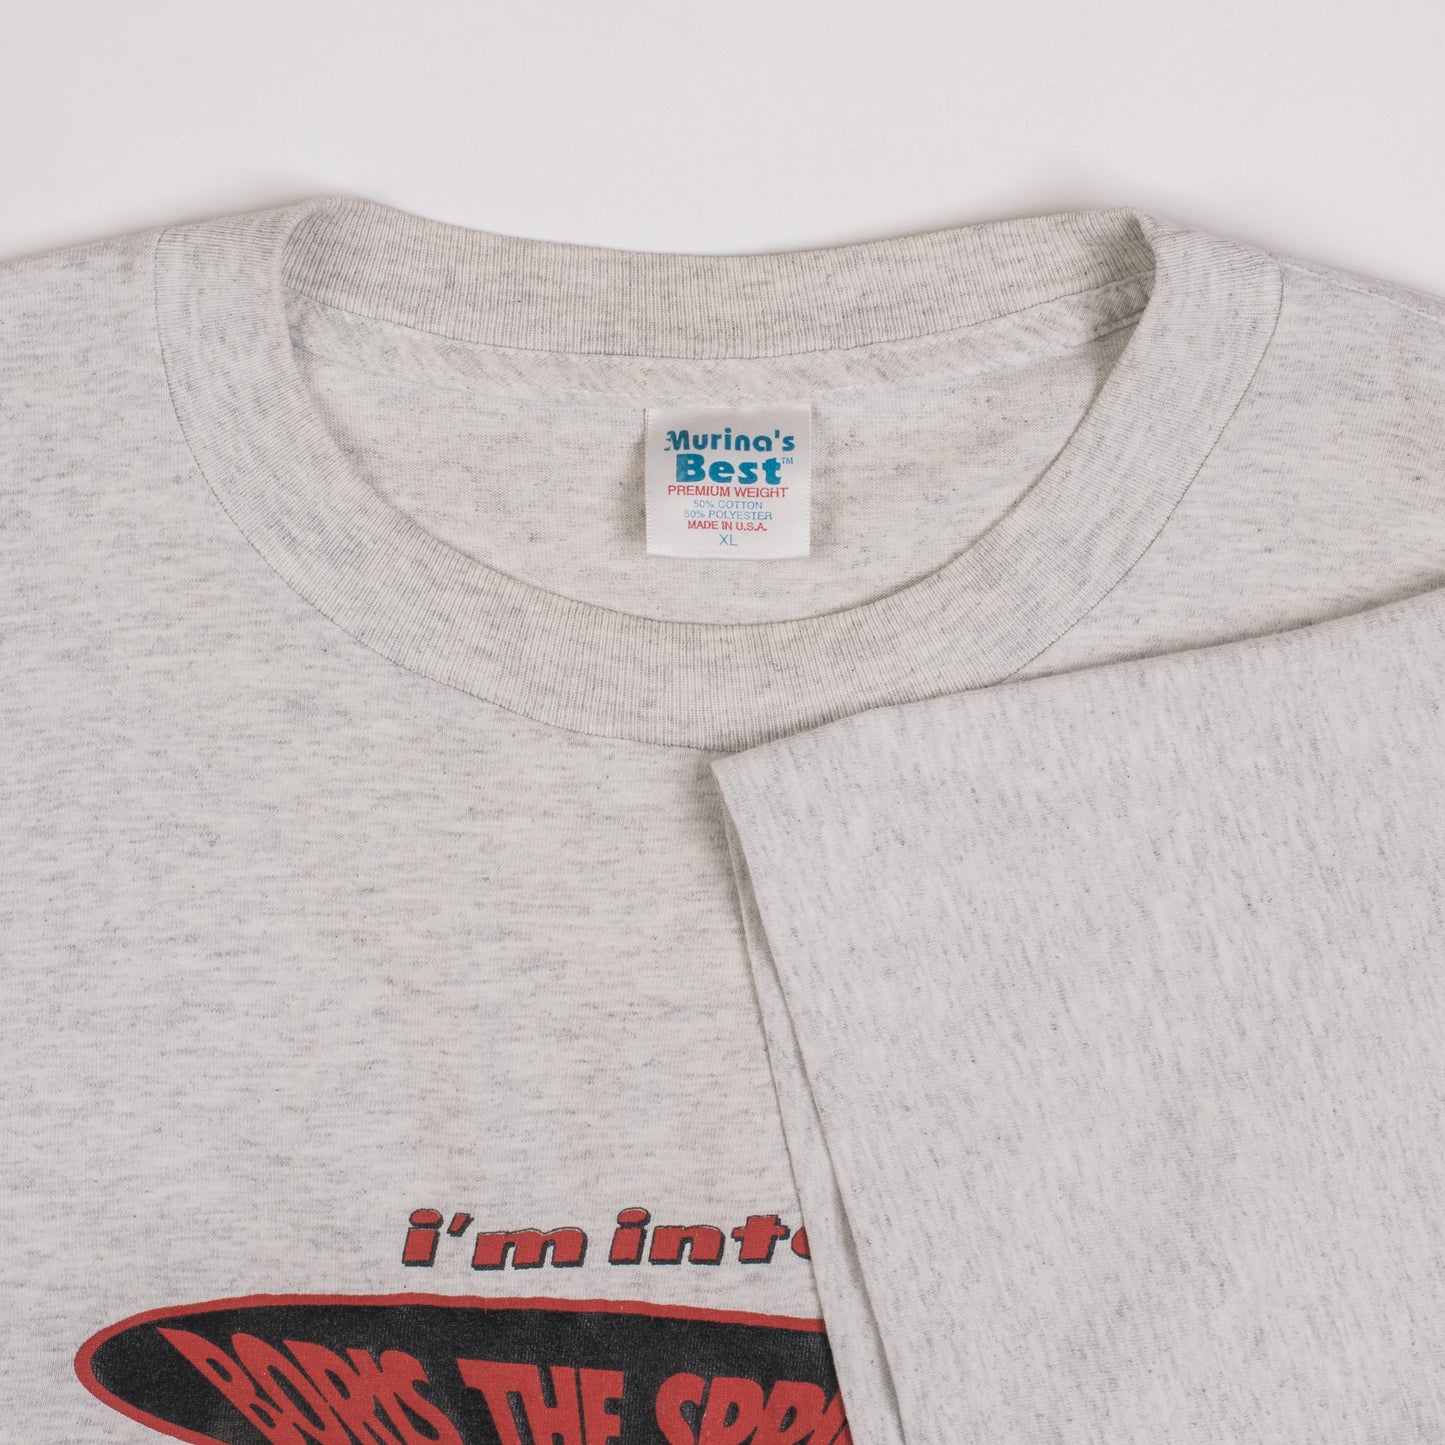 Vintage 90’s Boris The Sprinkler T-Shirt